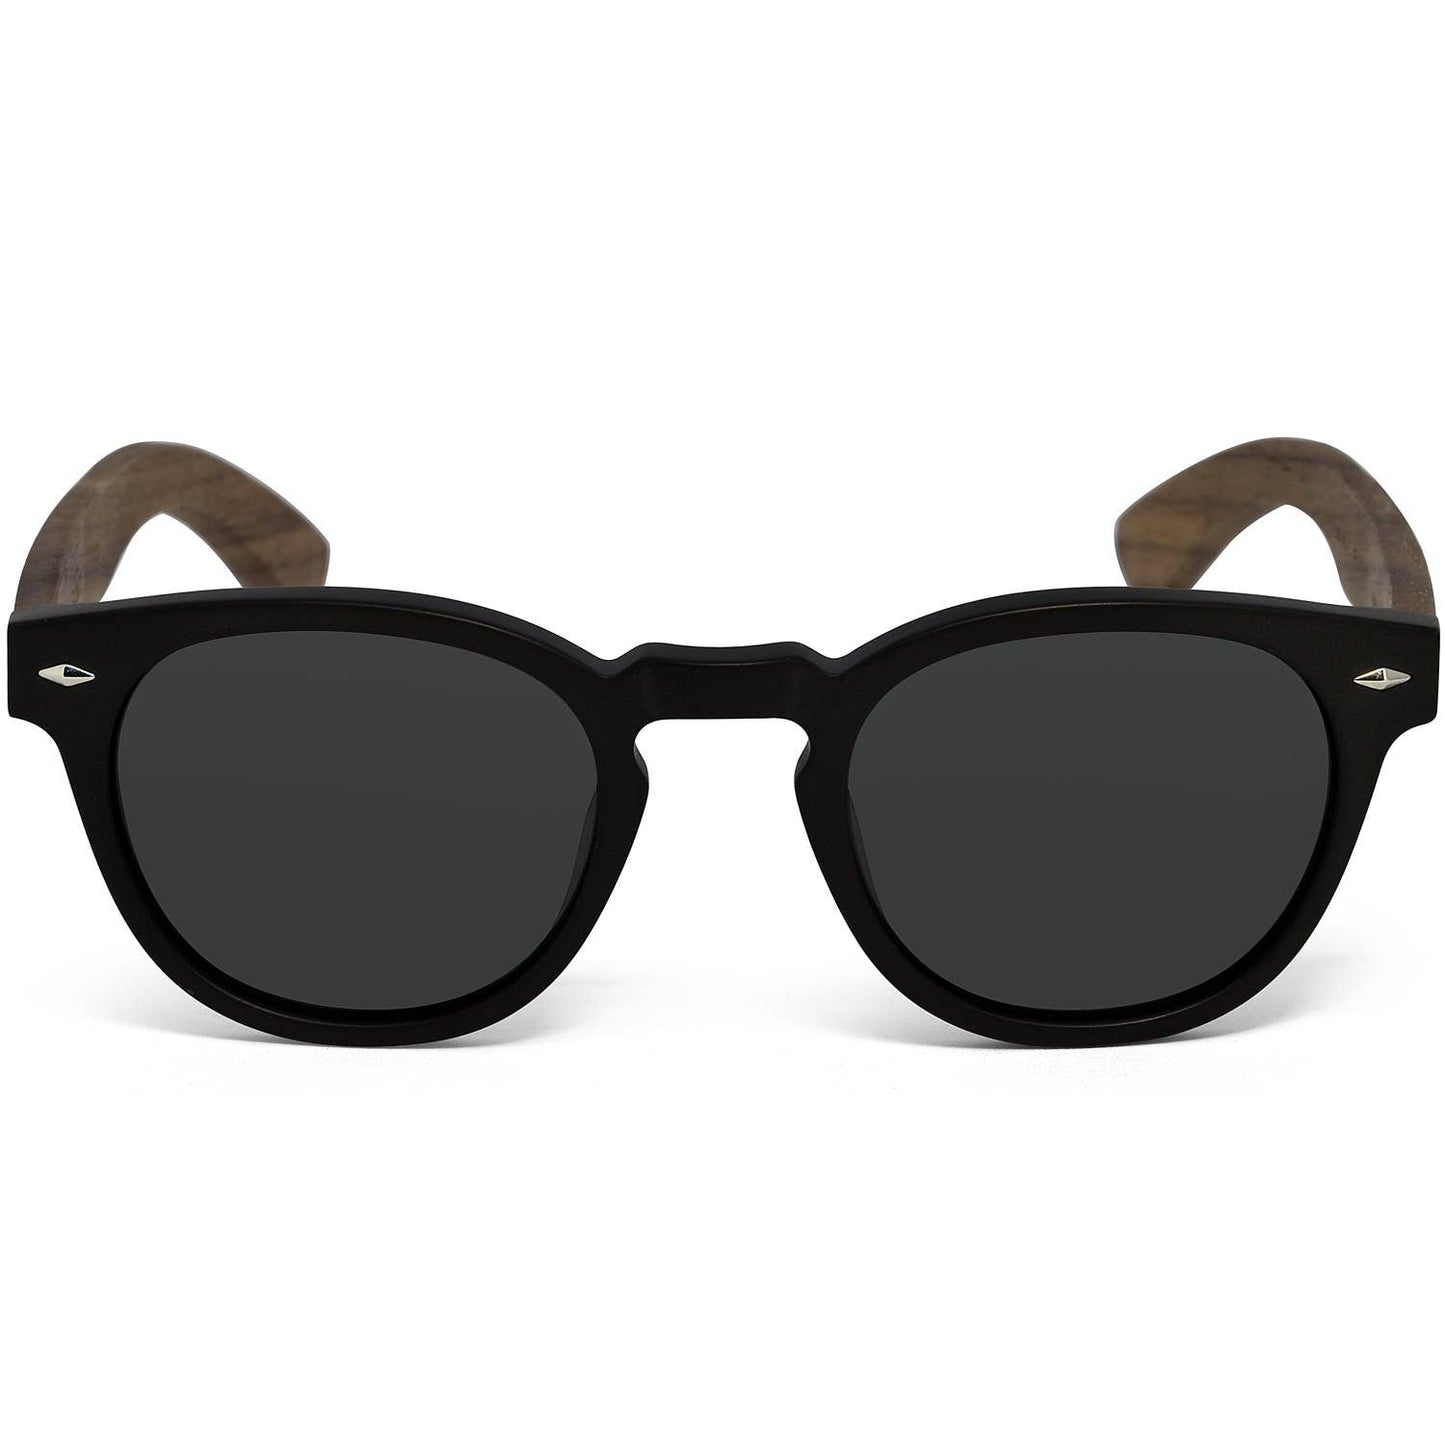 Round Walnut Wood Sunglasses